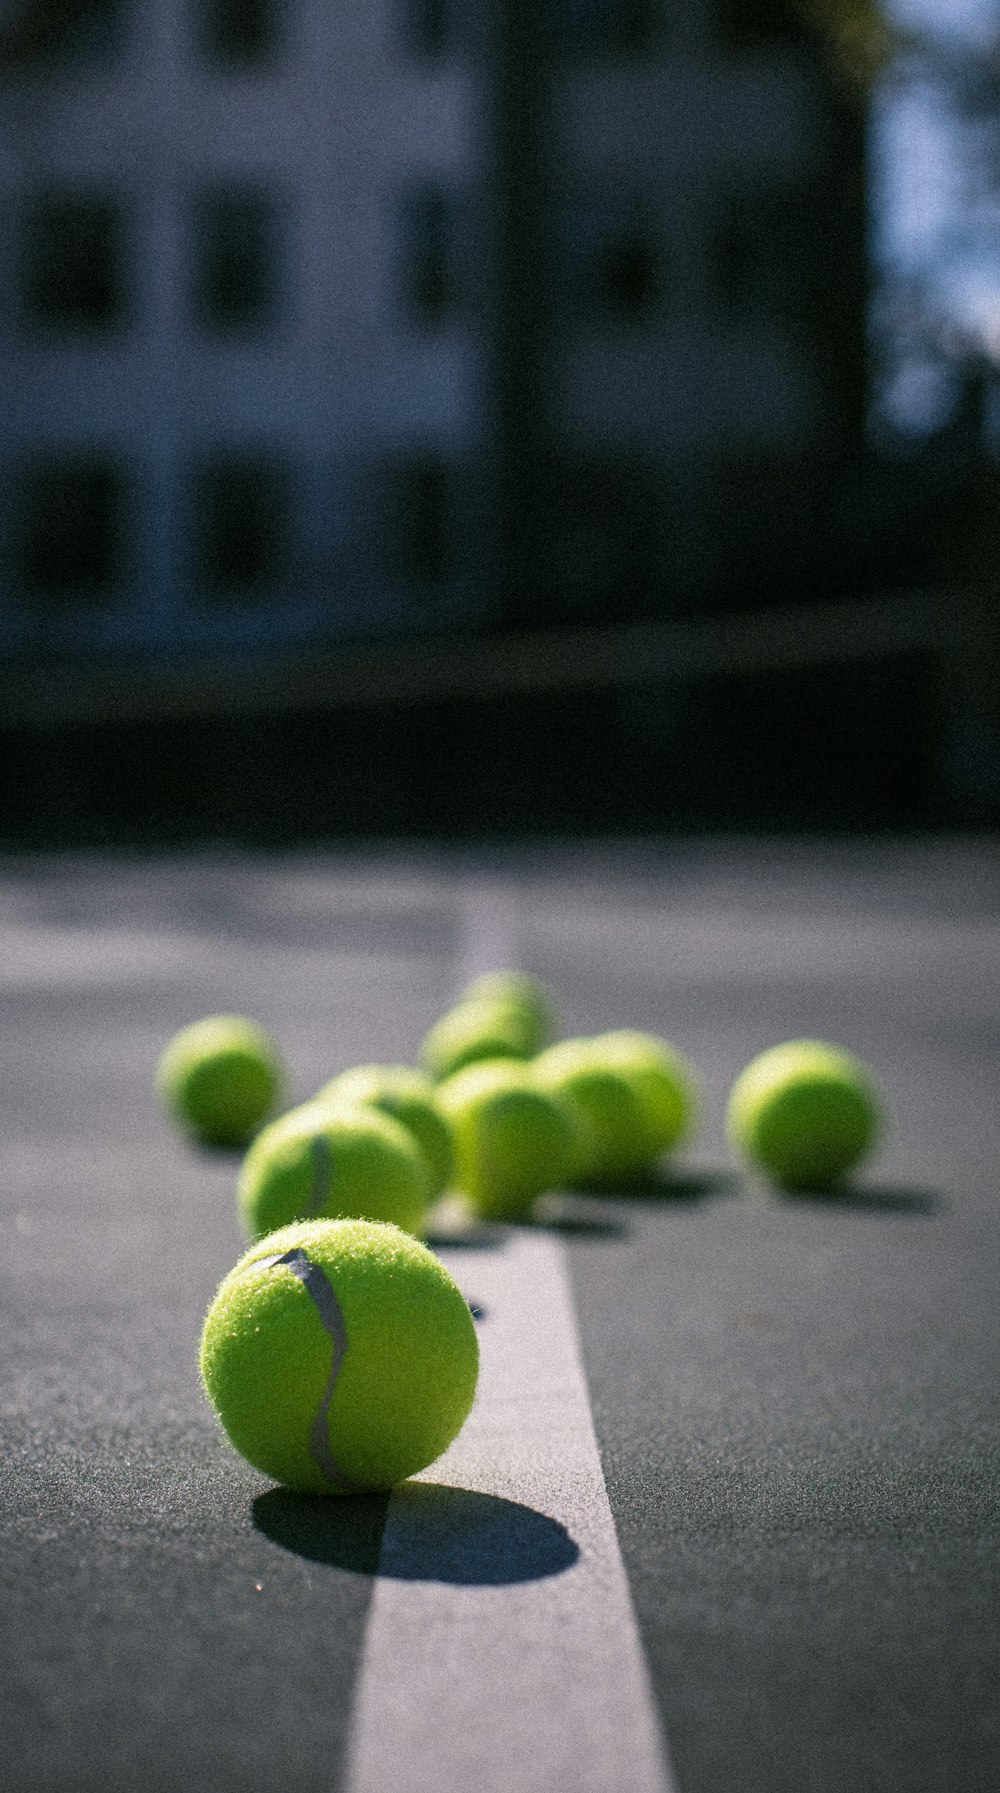 green tennis ball on gray concrete floor